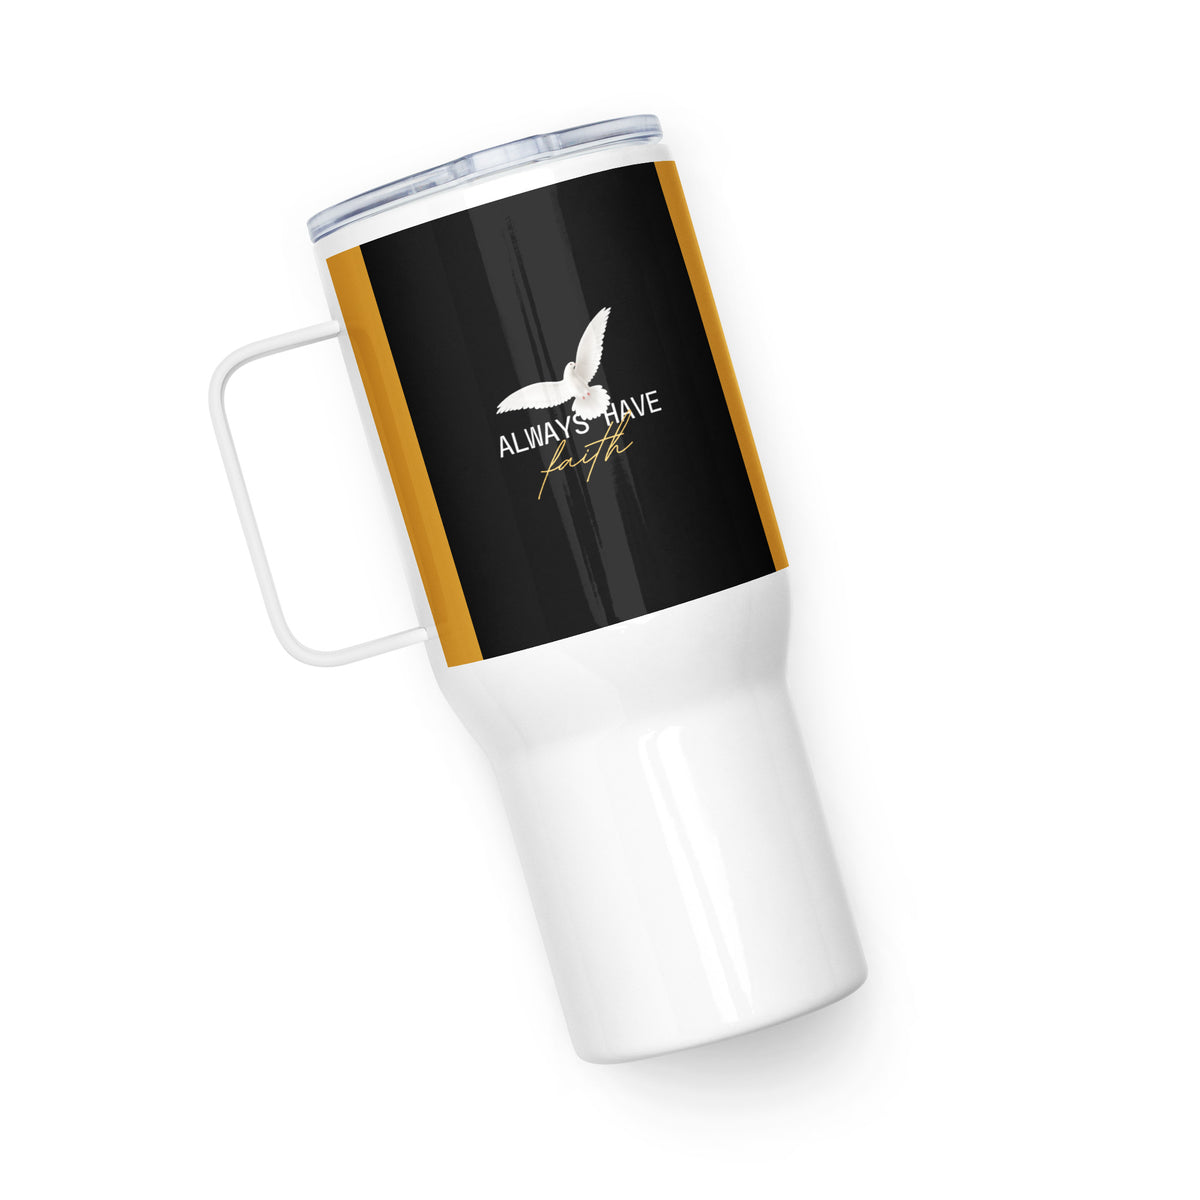 Always Have Faith travel mug with a handle - yellow